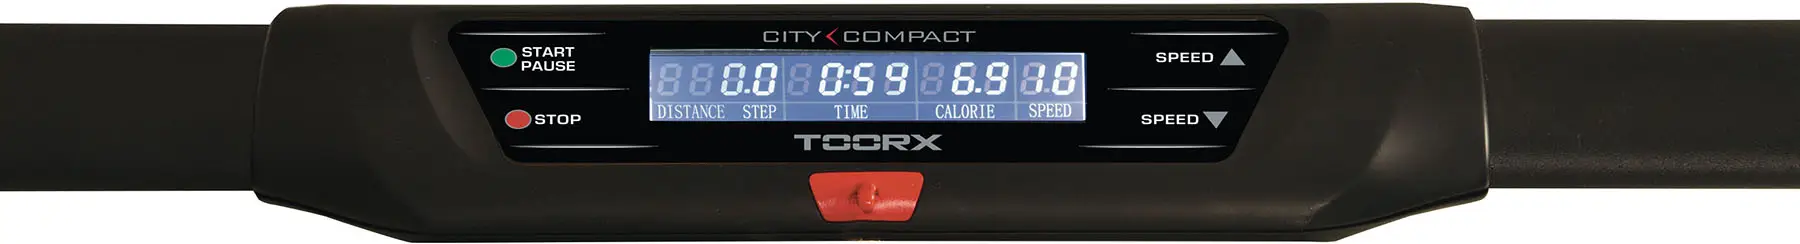 Бігова доріжка Toorx Treadmill City Compact Pearl White (CITY-COMPACT-W) 95901